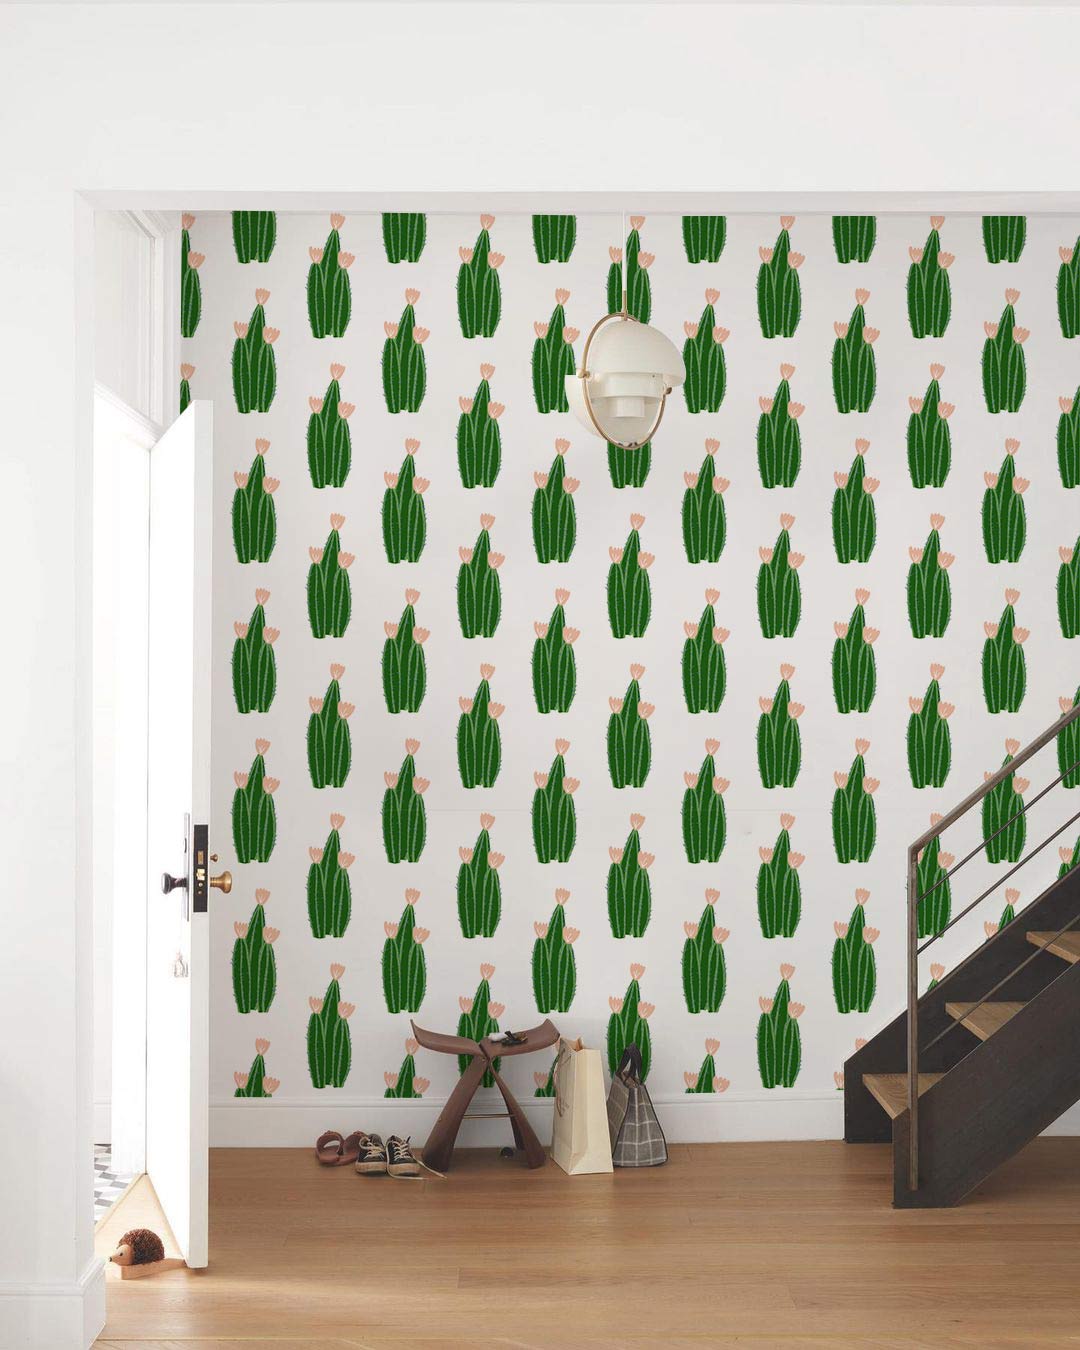 Cute Green Cactus Wallpaper Mural Home Interior Decor